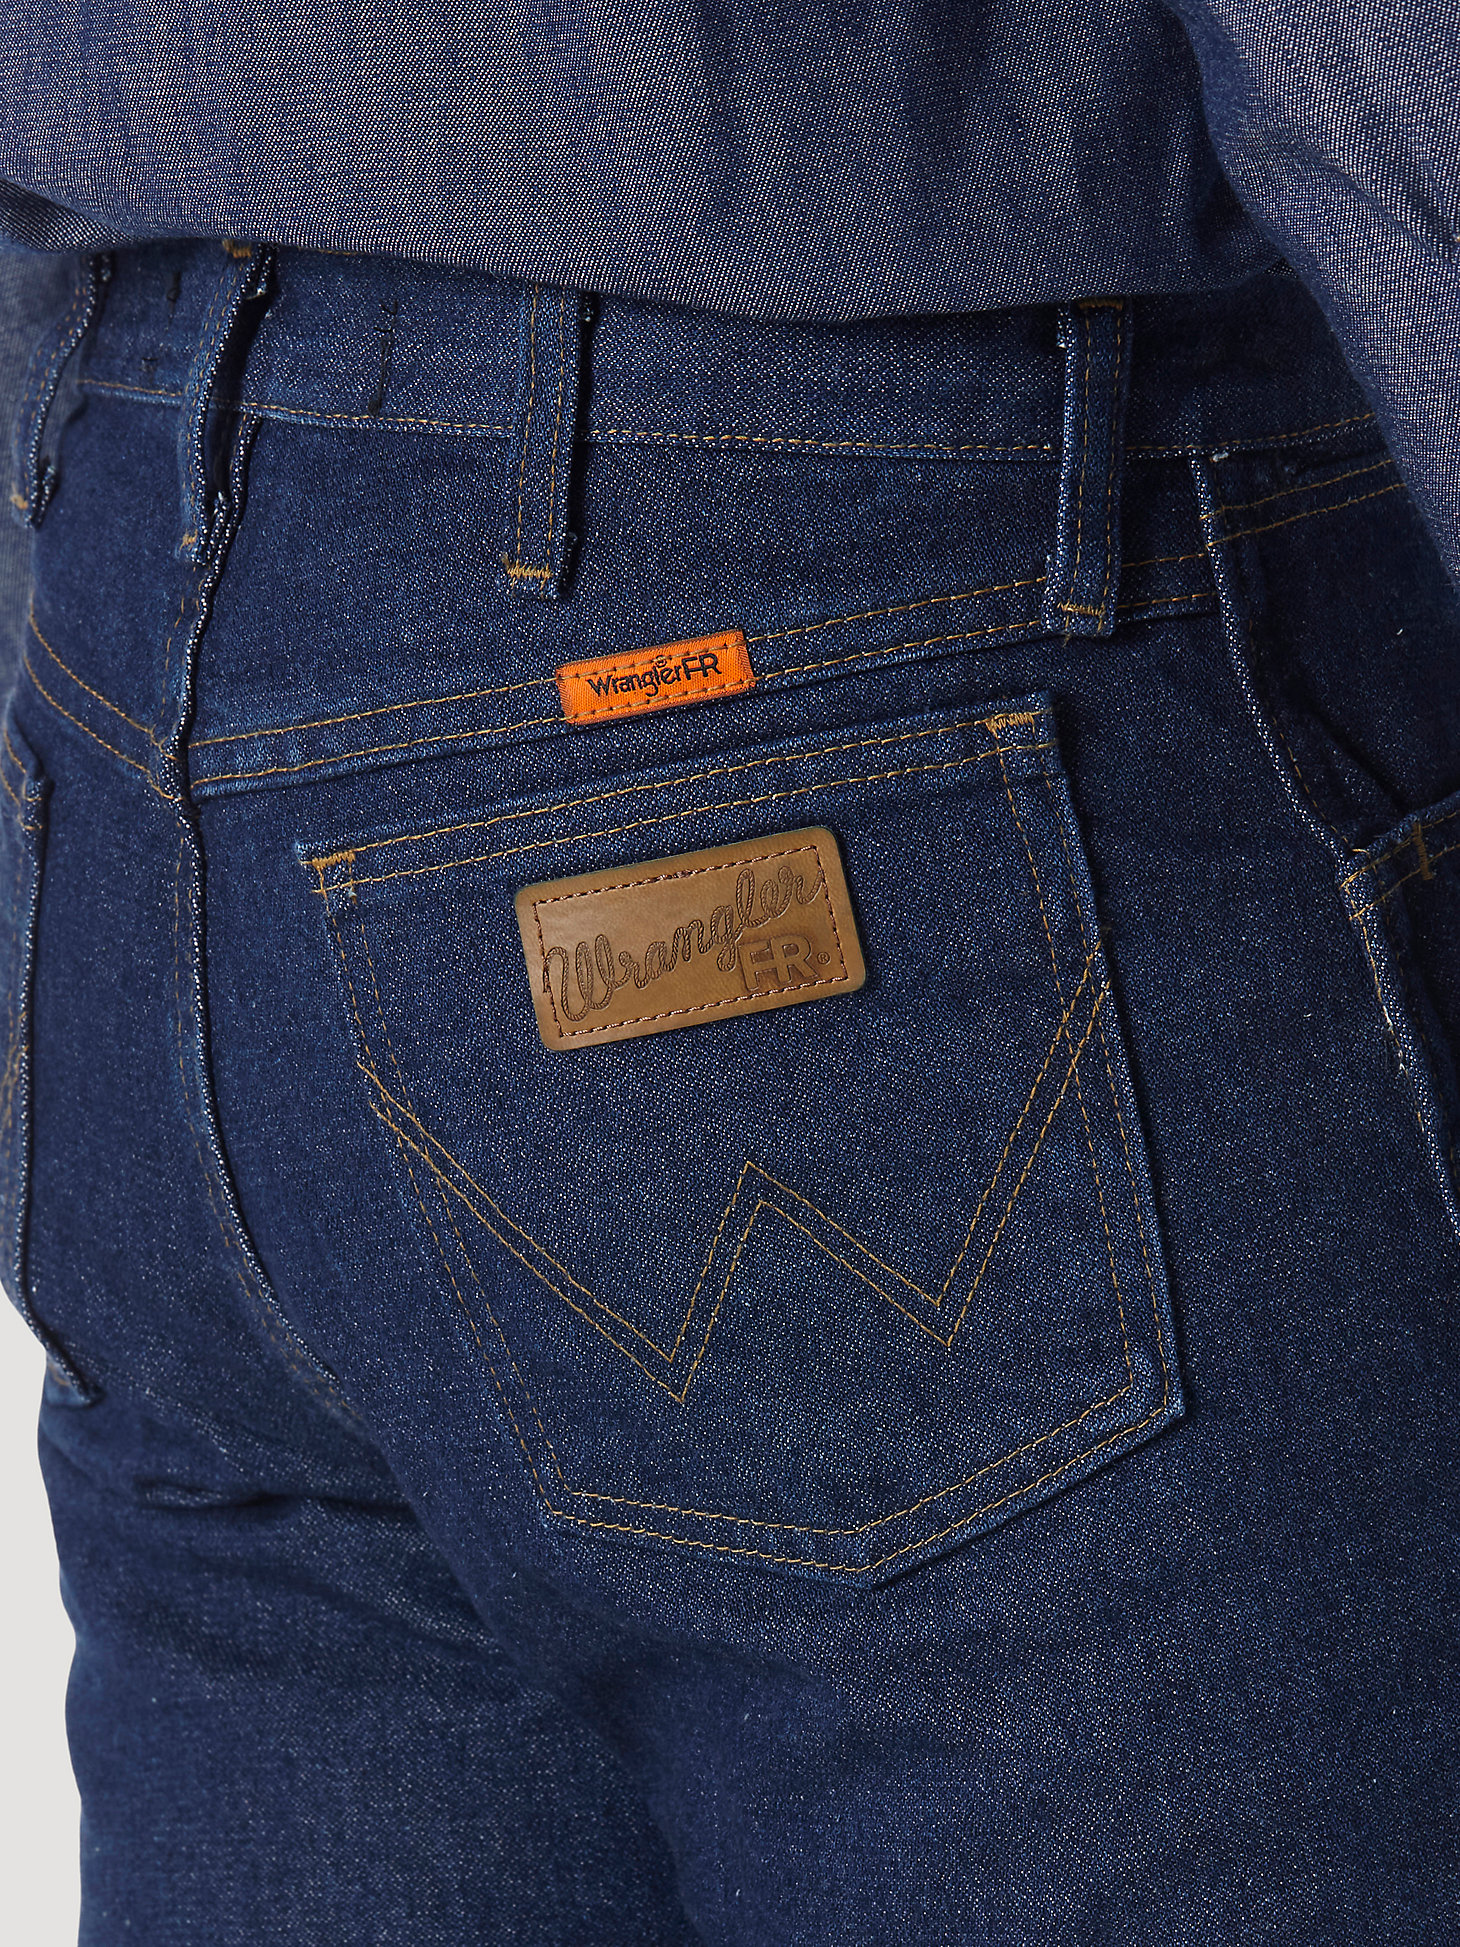 Wrangler® FR Flame Resistant Original Fit Jean in PREWASH alternative view 3